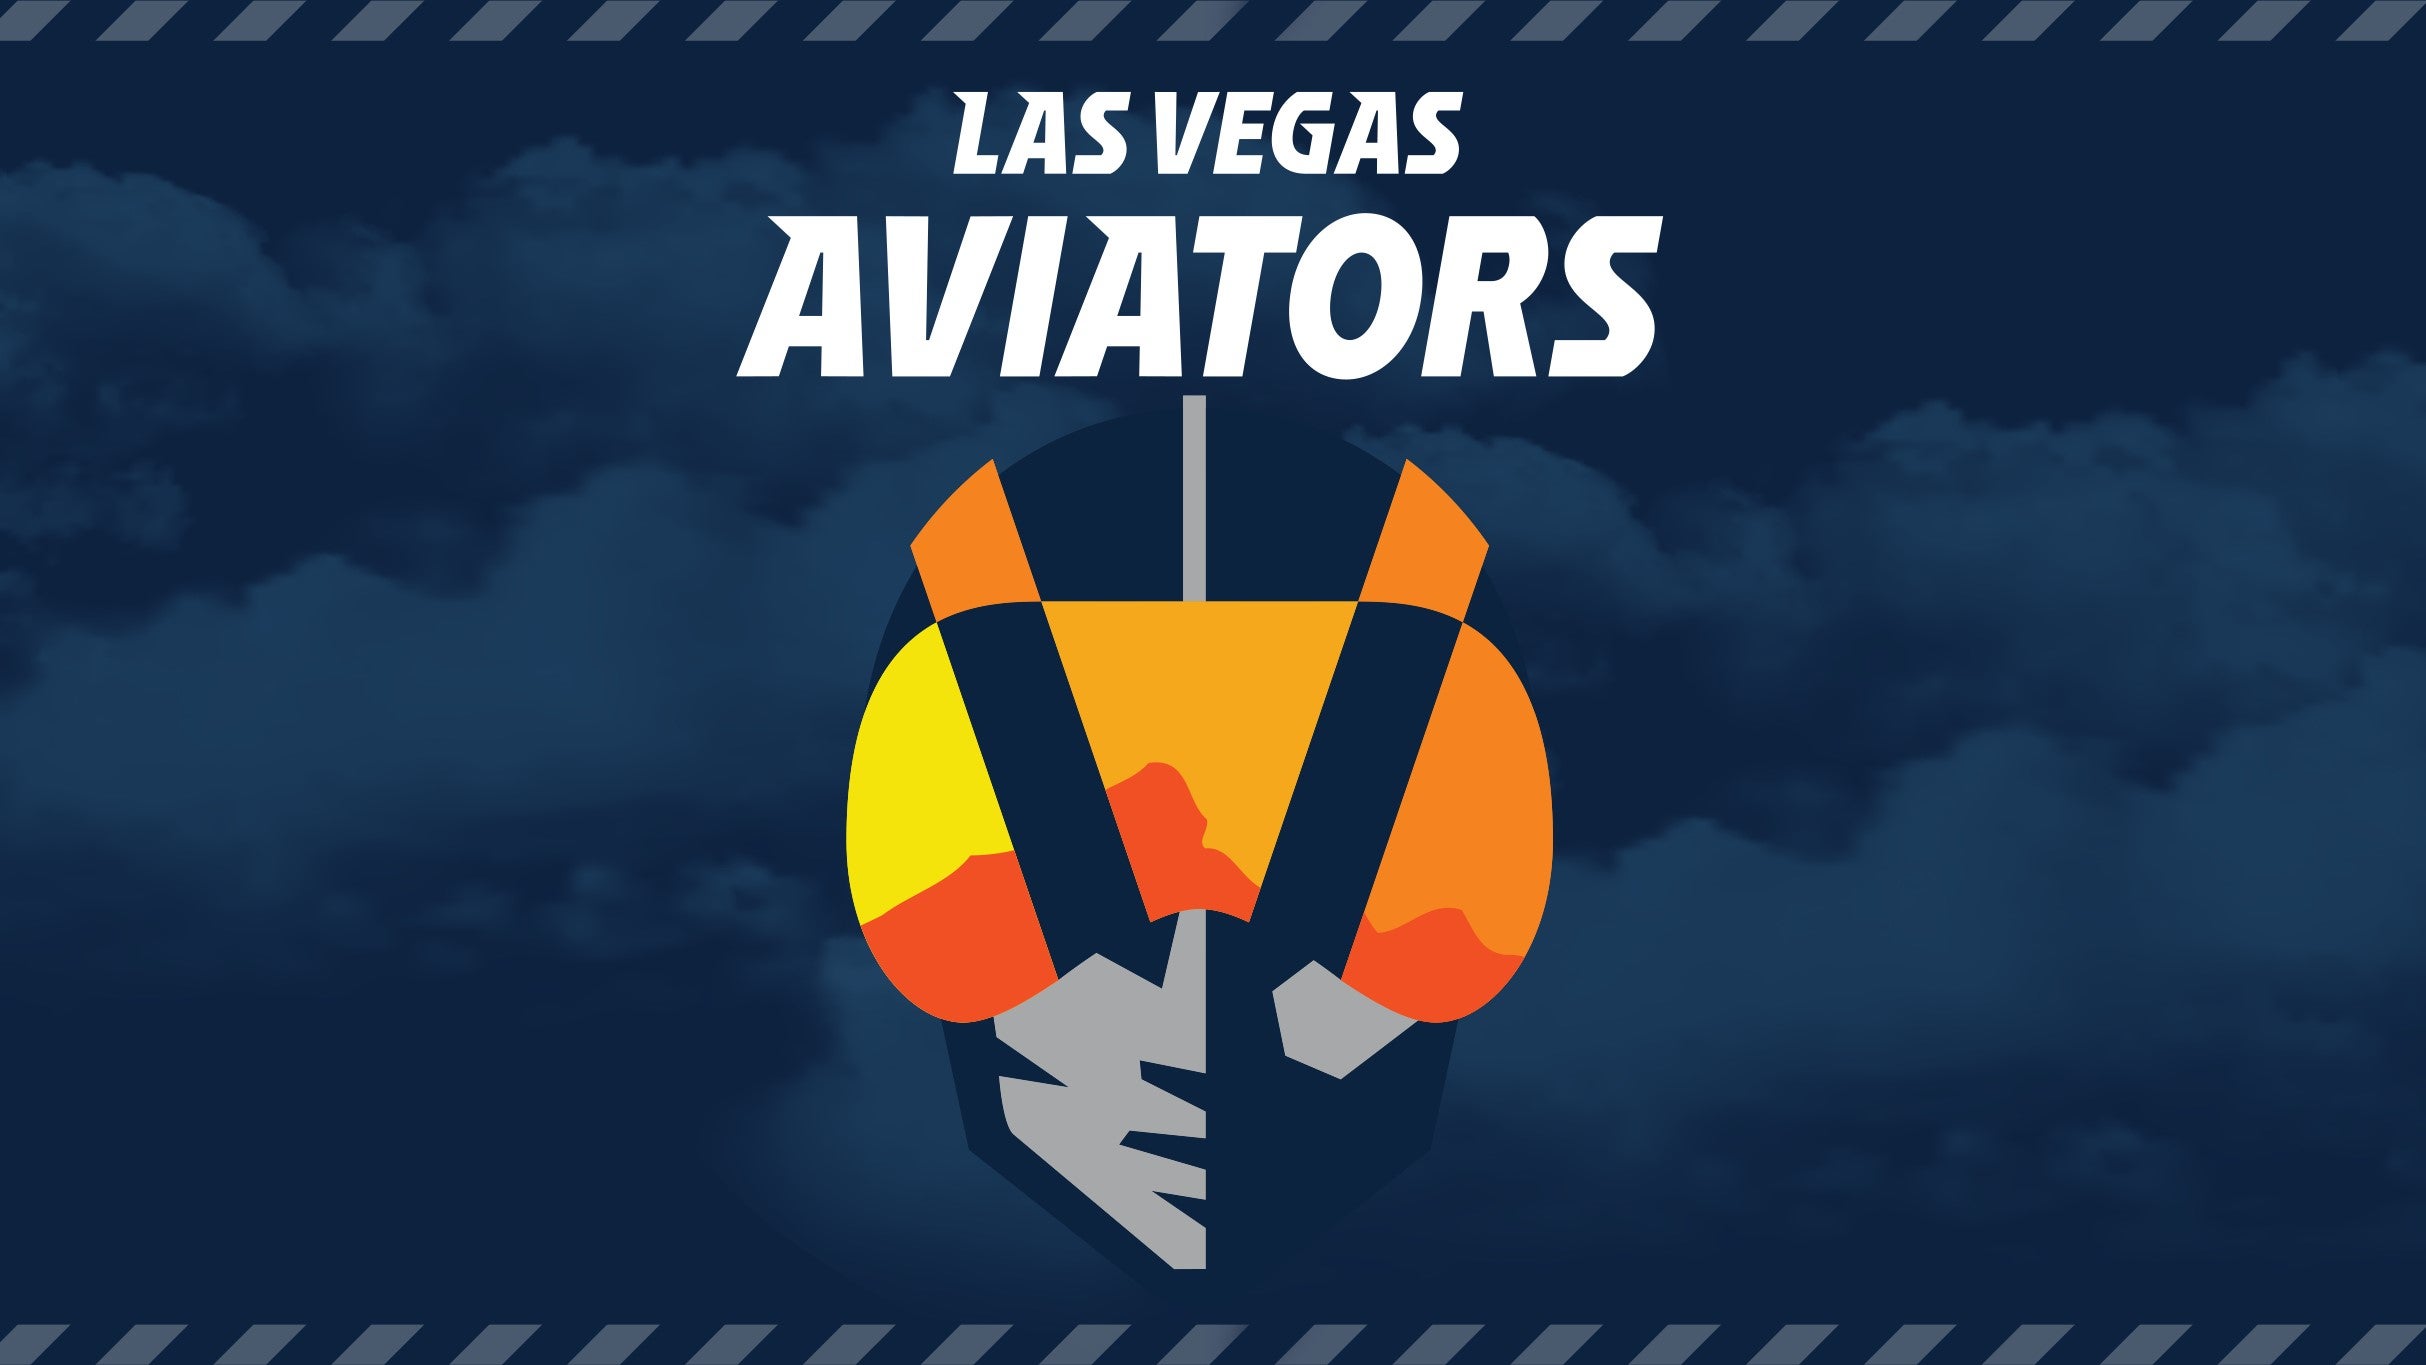 Las Vegas Aviators vs. Sugar Land Space Cowboys presales in Las Vegas